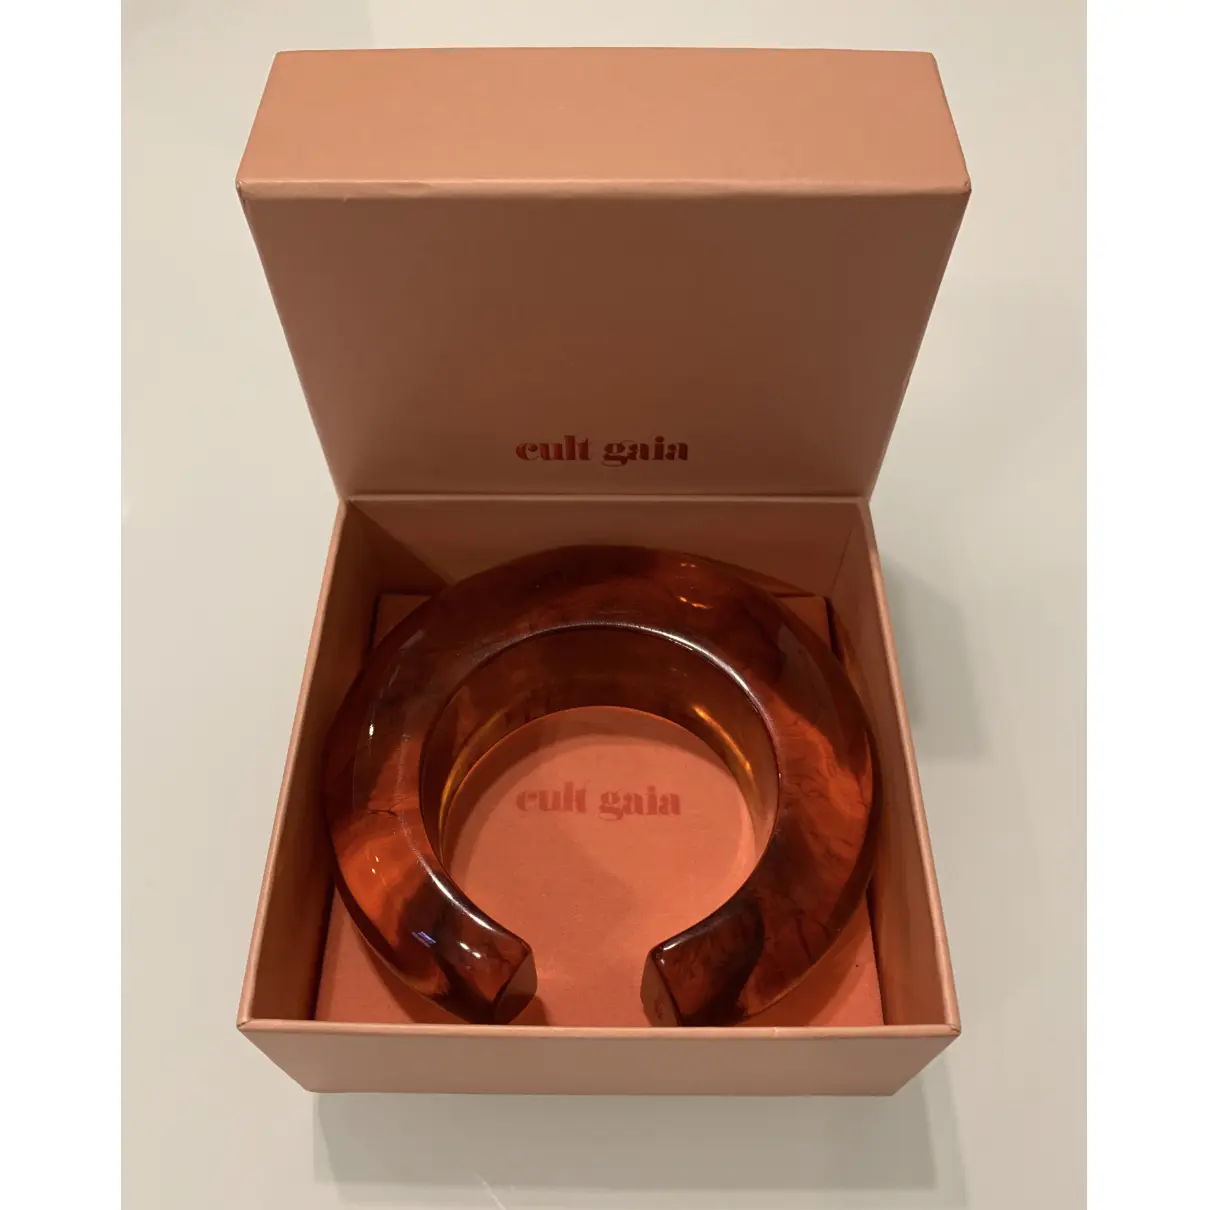 Buy Cult Gaia Brown Plastic Bracelet online